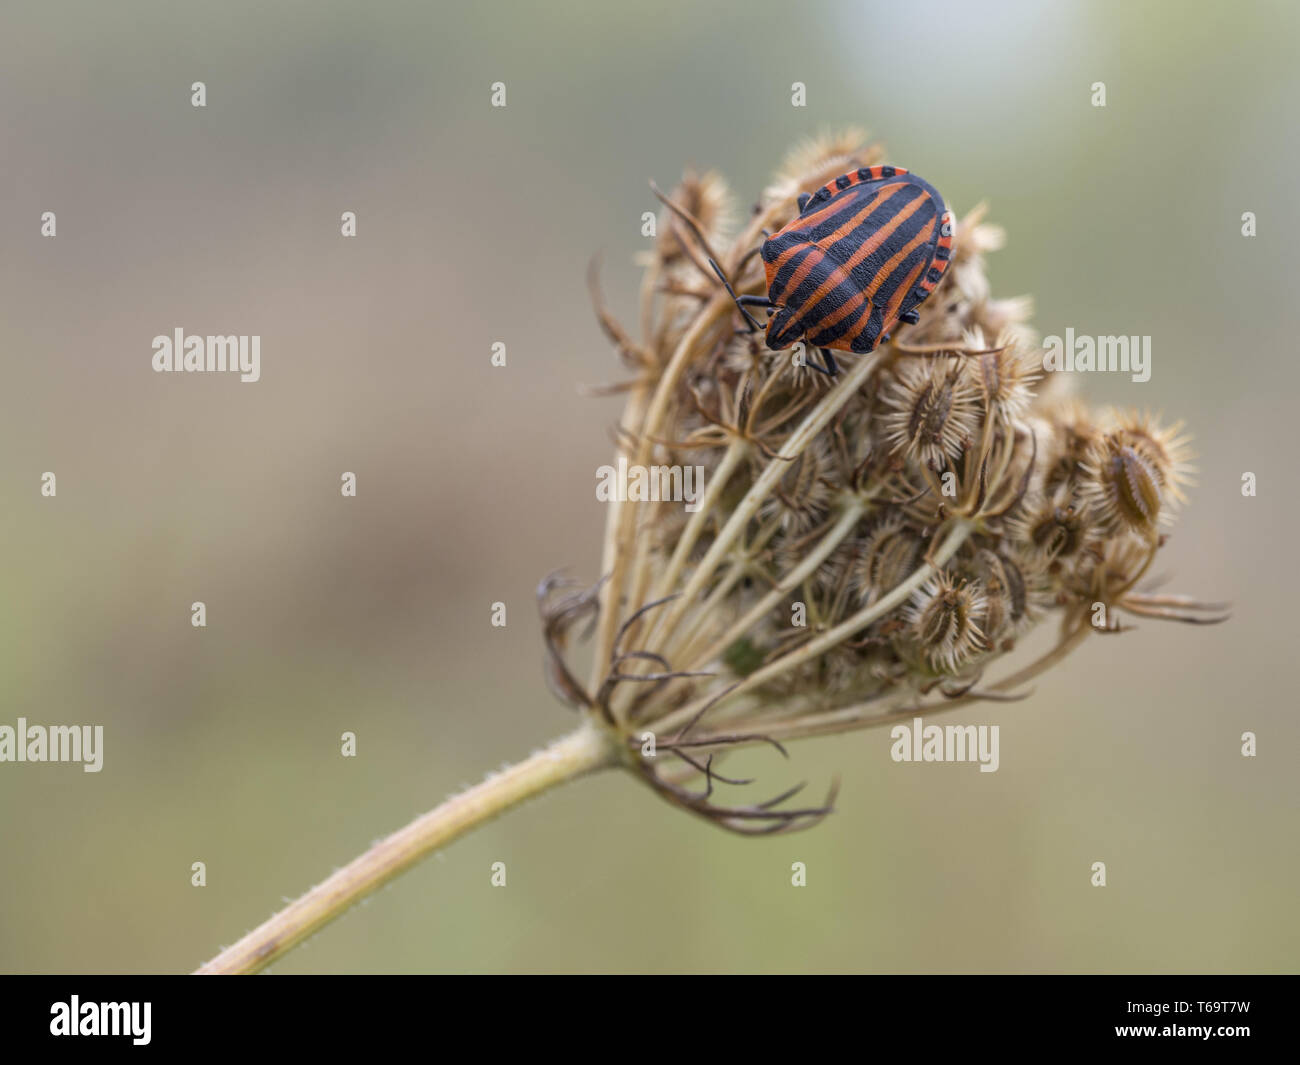 Striped-Bug on a plant, Graphosoma lineatum Stock Photo